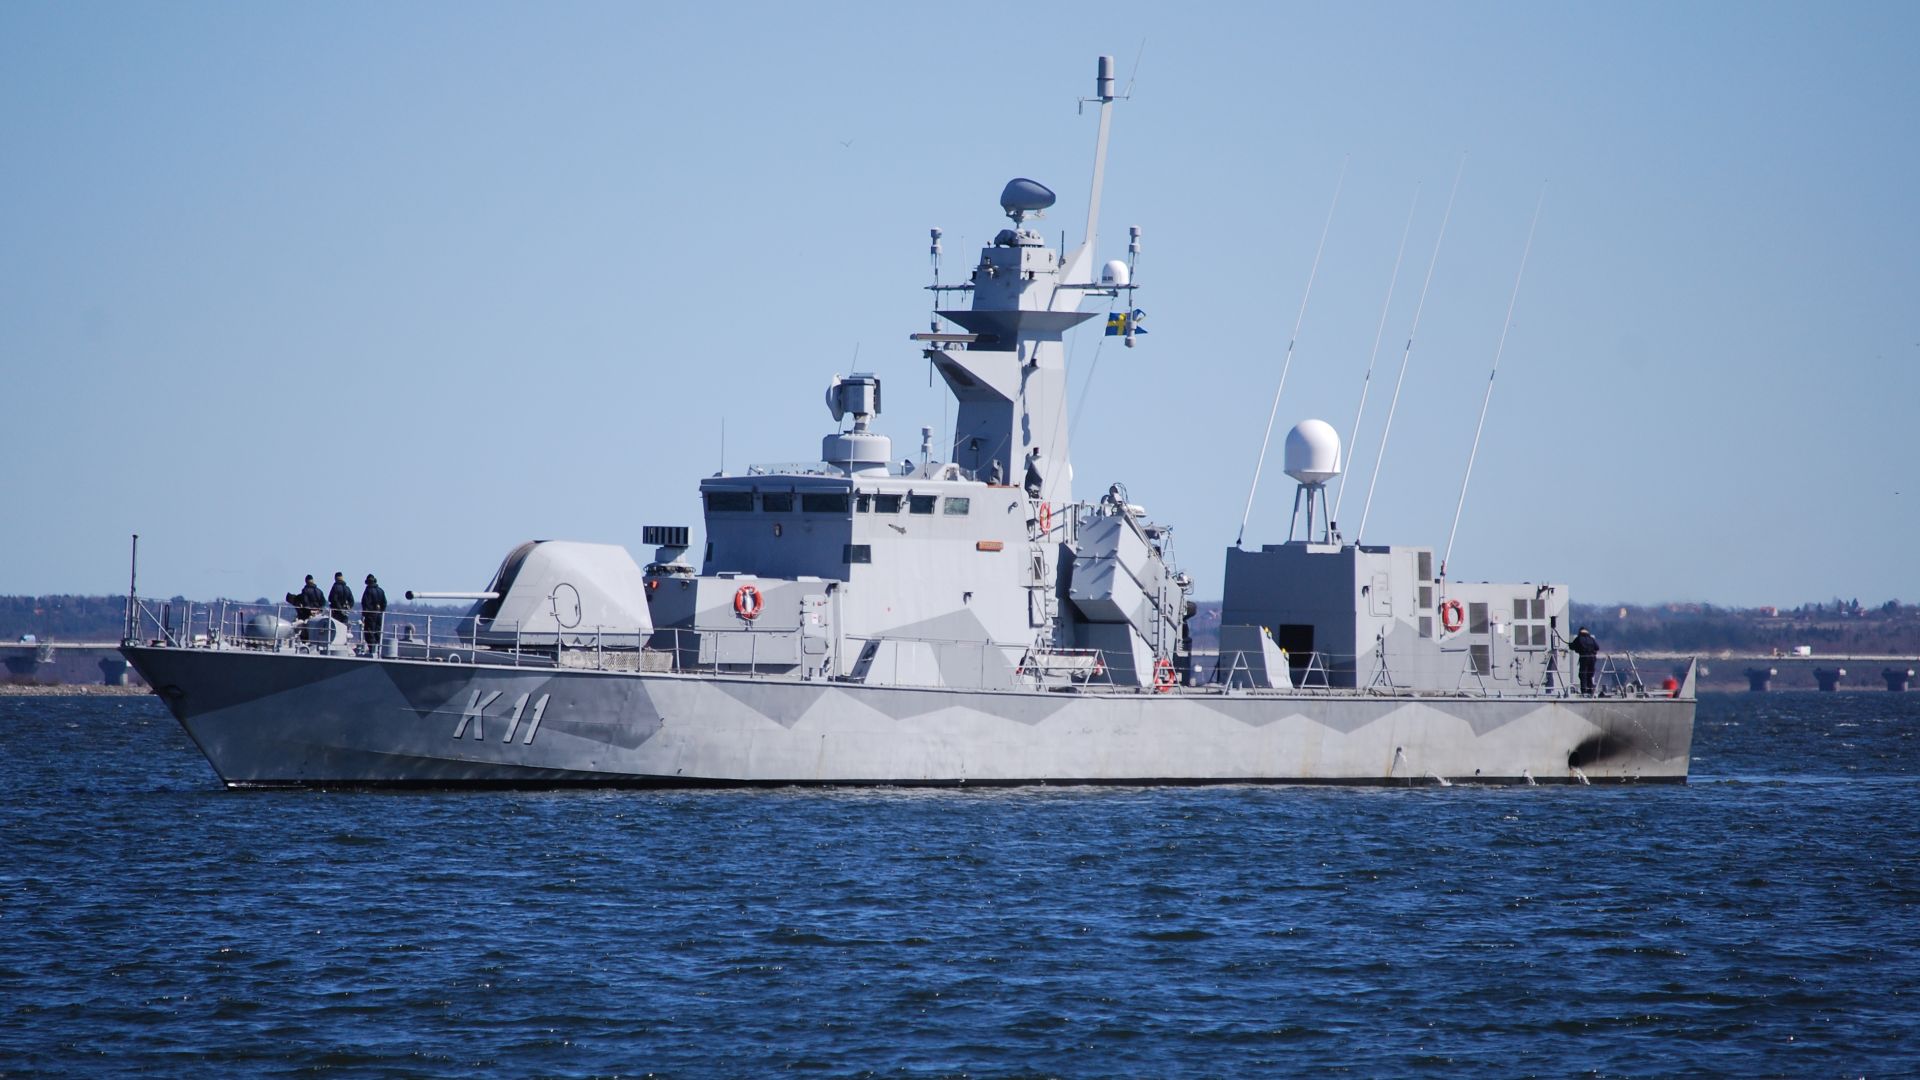 ШМС Стокгольм, корвет, ВМС Швеции, Hms Stockholm, corvette, Swedish Navy (horizontal)